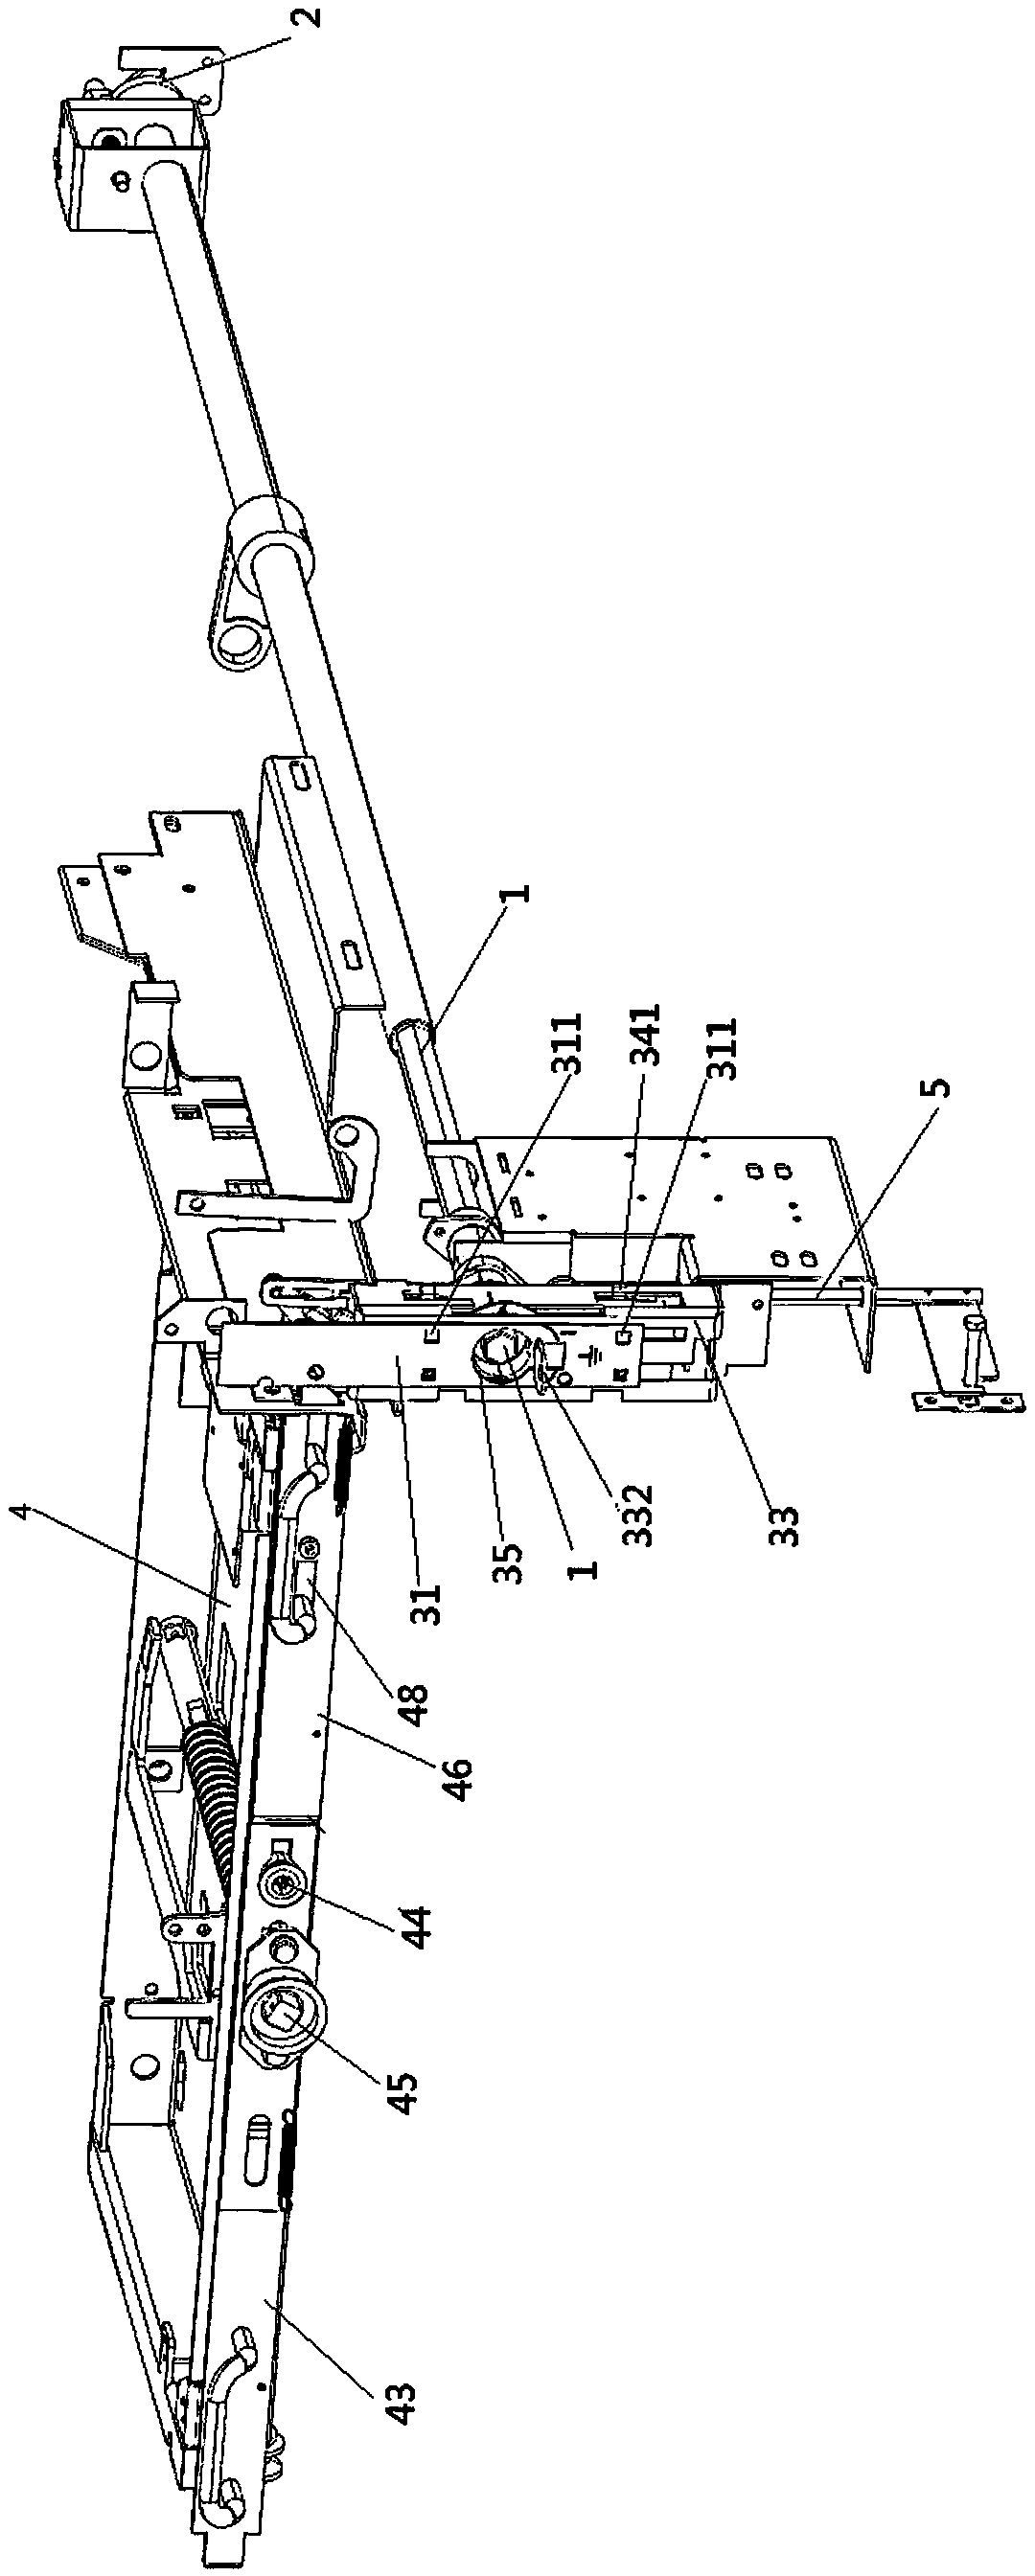 A handcart interlocking mechanism of a five-prevention interlocking device